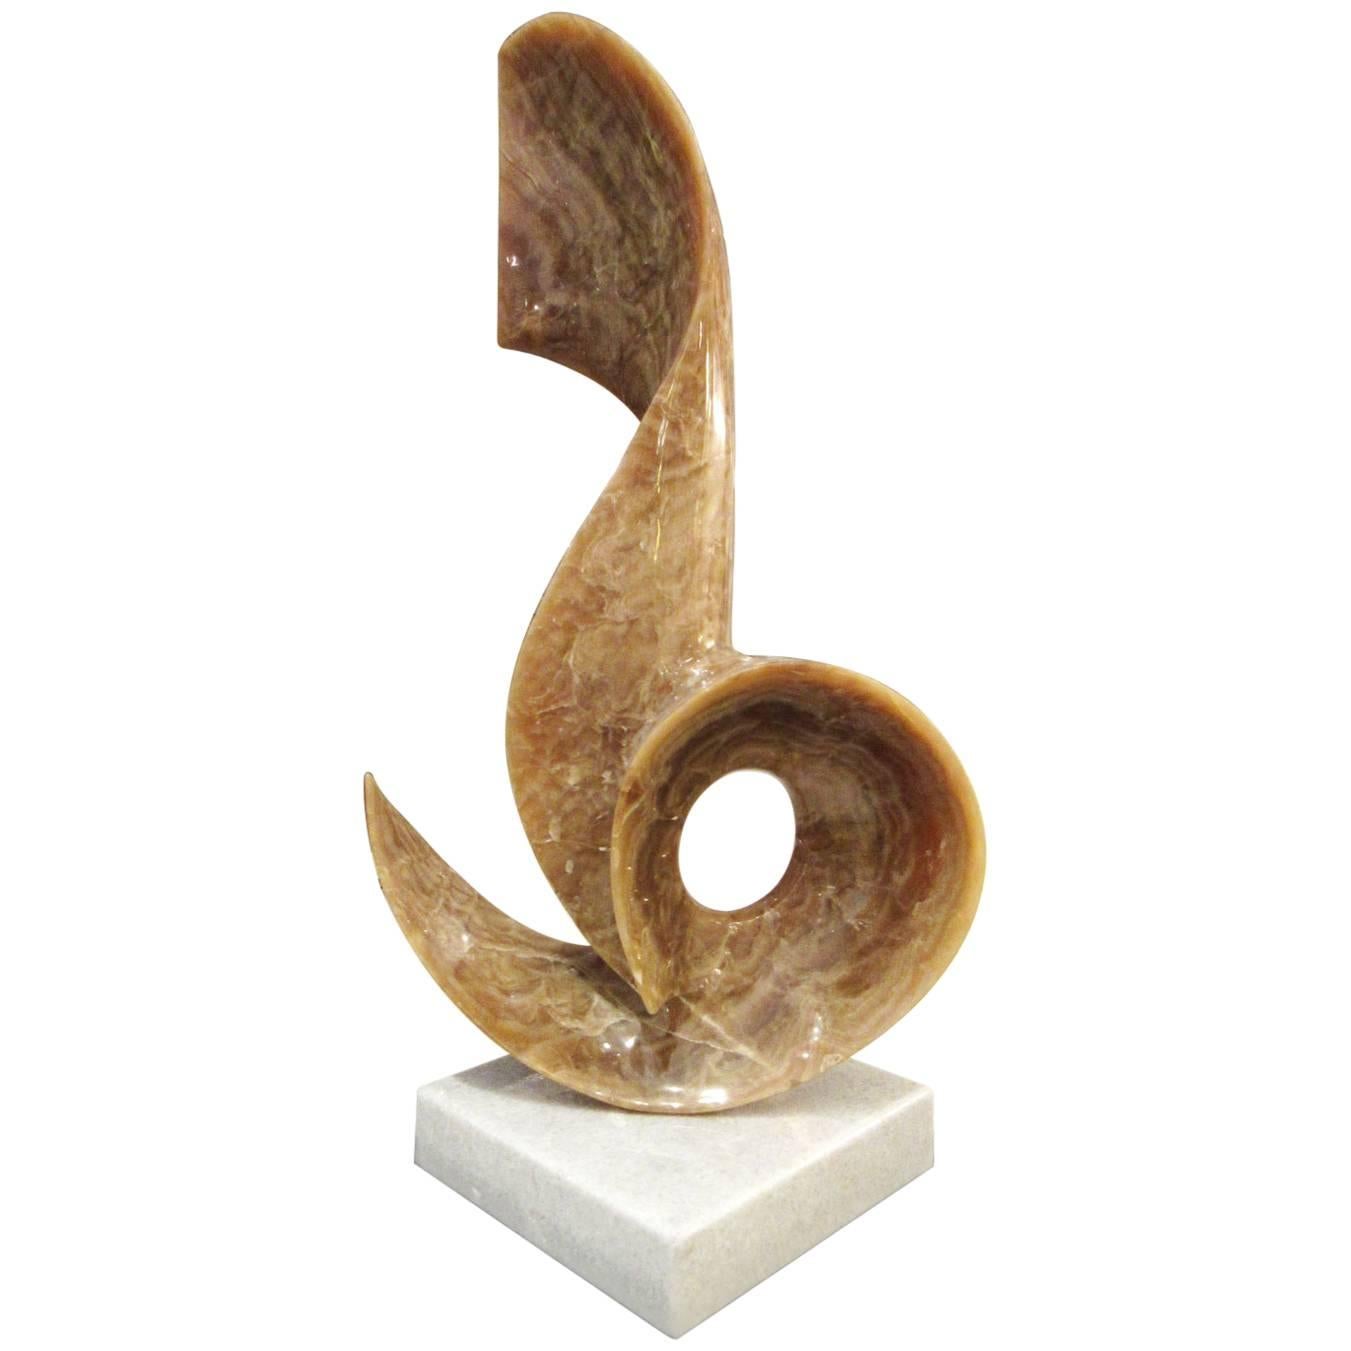 Leonardo Nierman "Harmony" Marble Sculpture